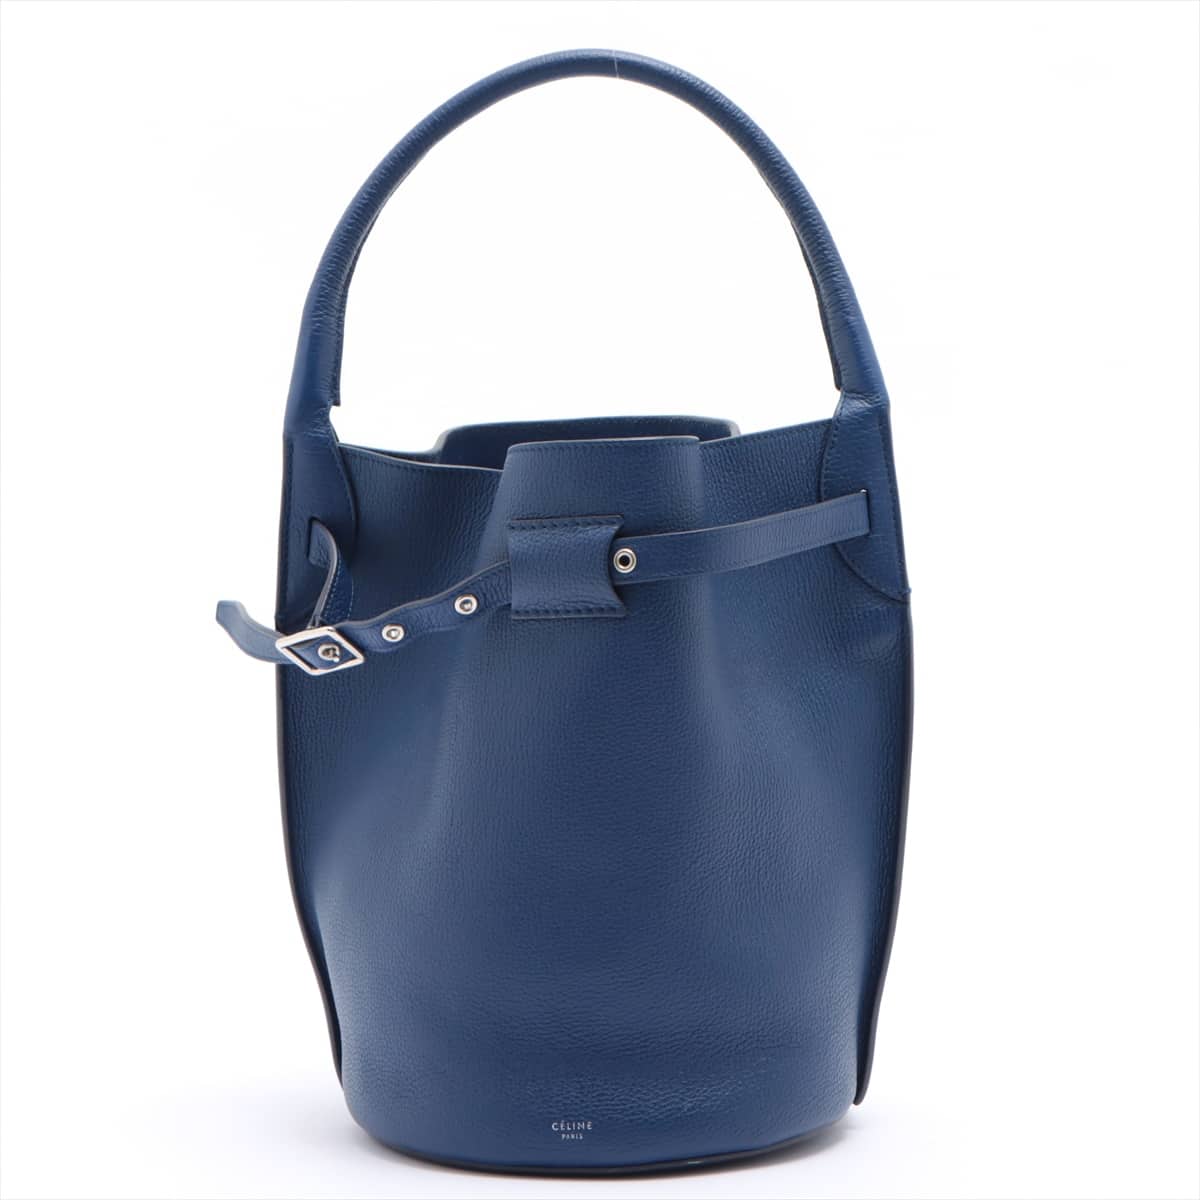 CELINE BIG BAG buckets Leather Shoulder bag Blue with pouch